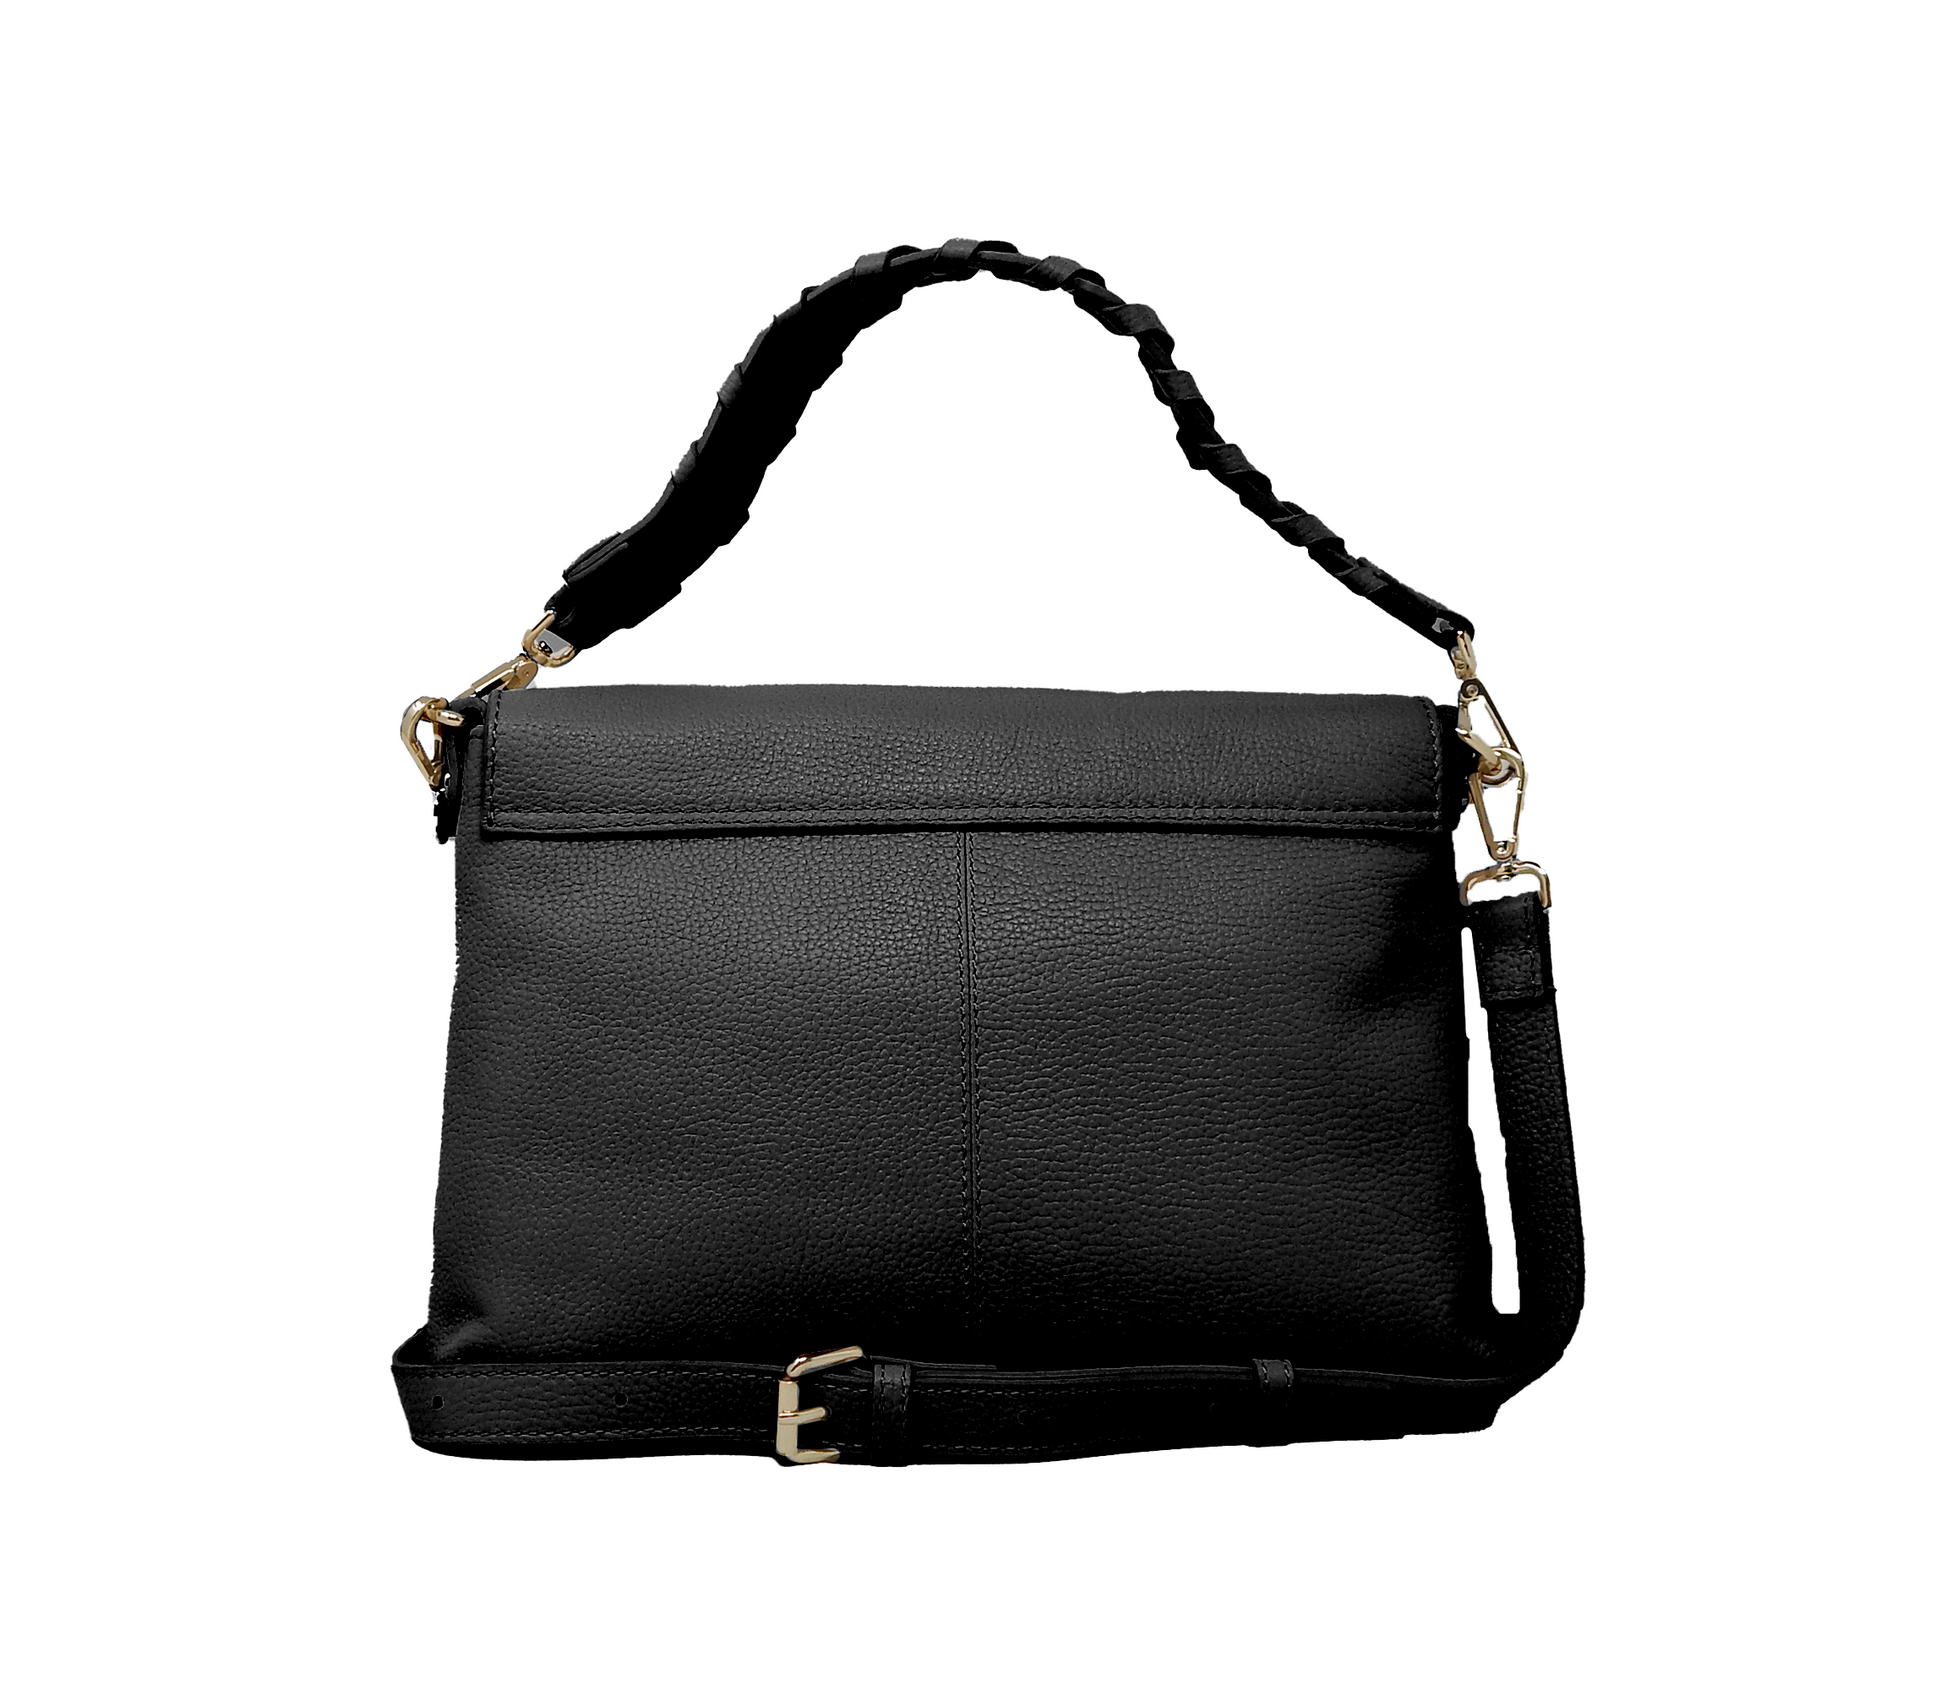 Cavalinho Infinity 3 in 1: Clutch, Handbag or Crossbody Bag - Black - 18230458_01_b